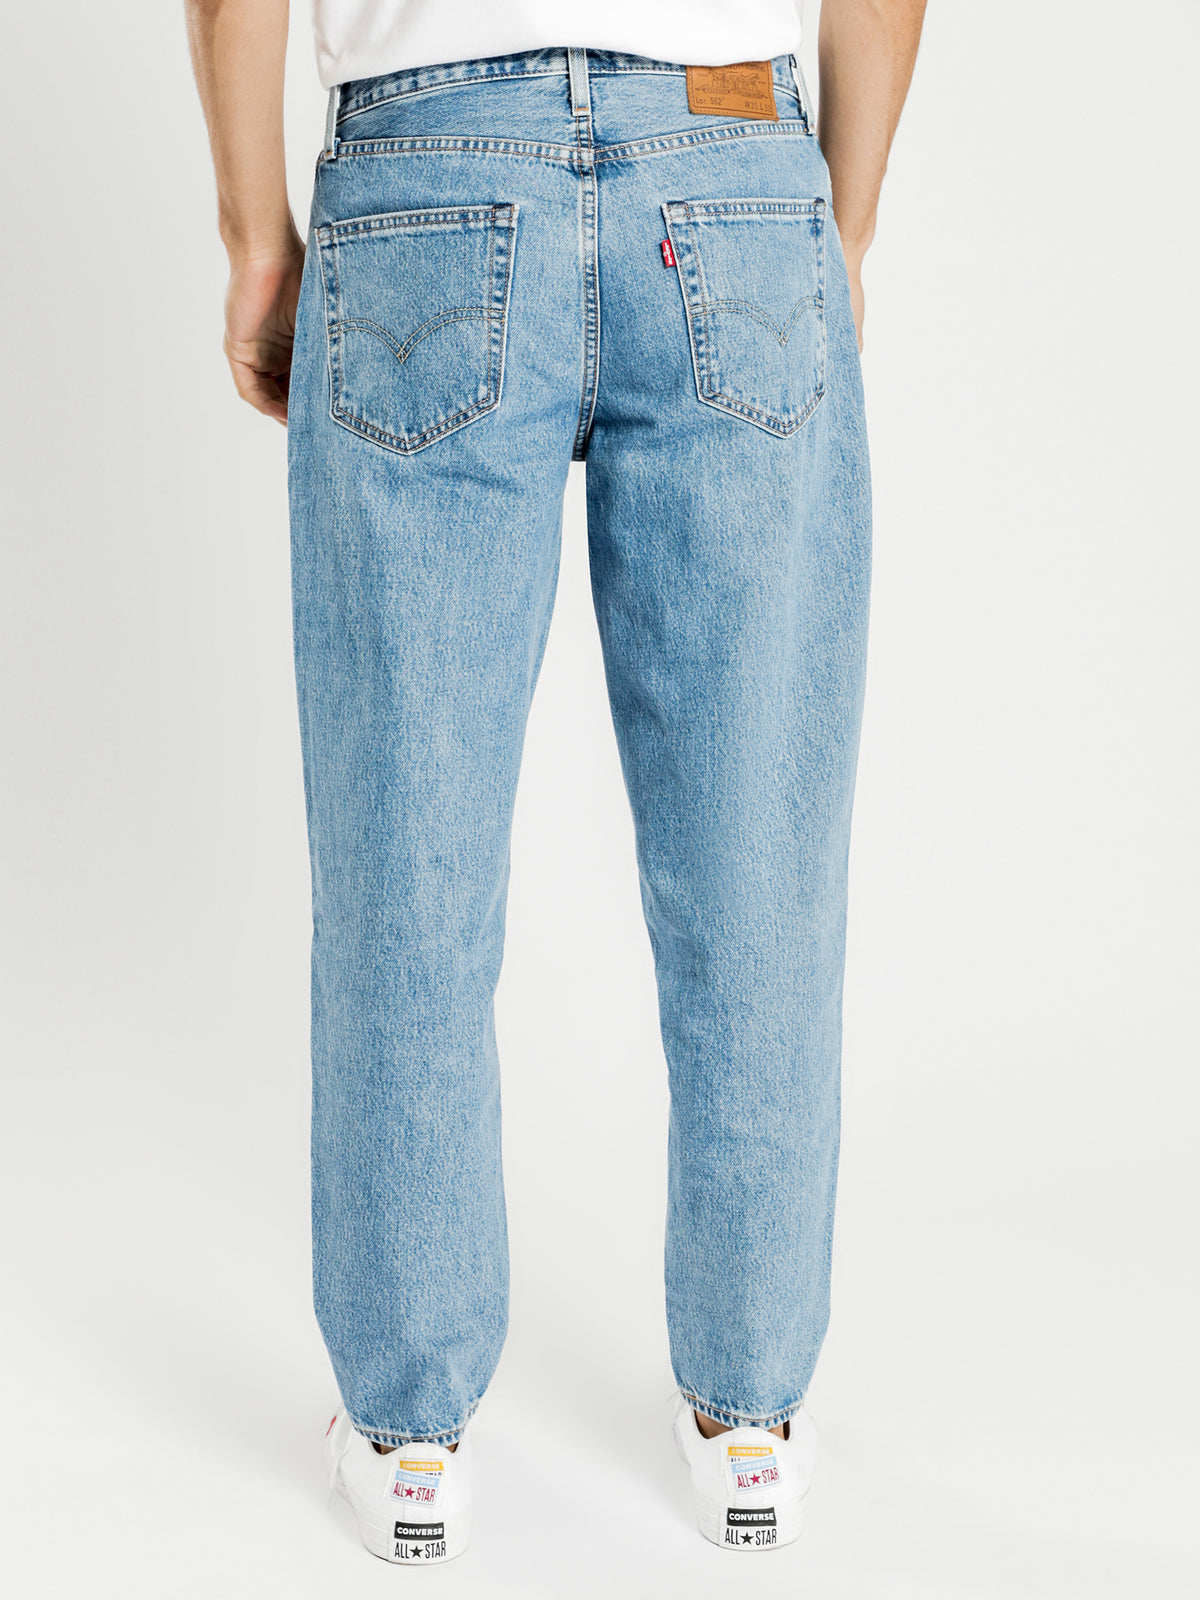 562 Loose Taper Jeans in Shorty Light Denim